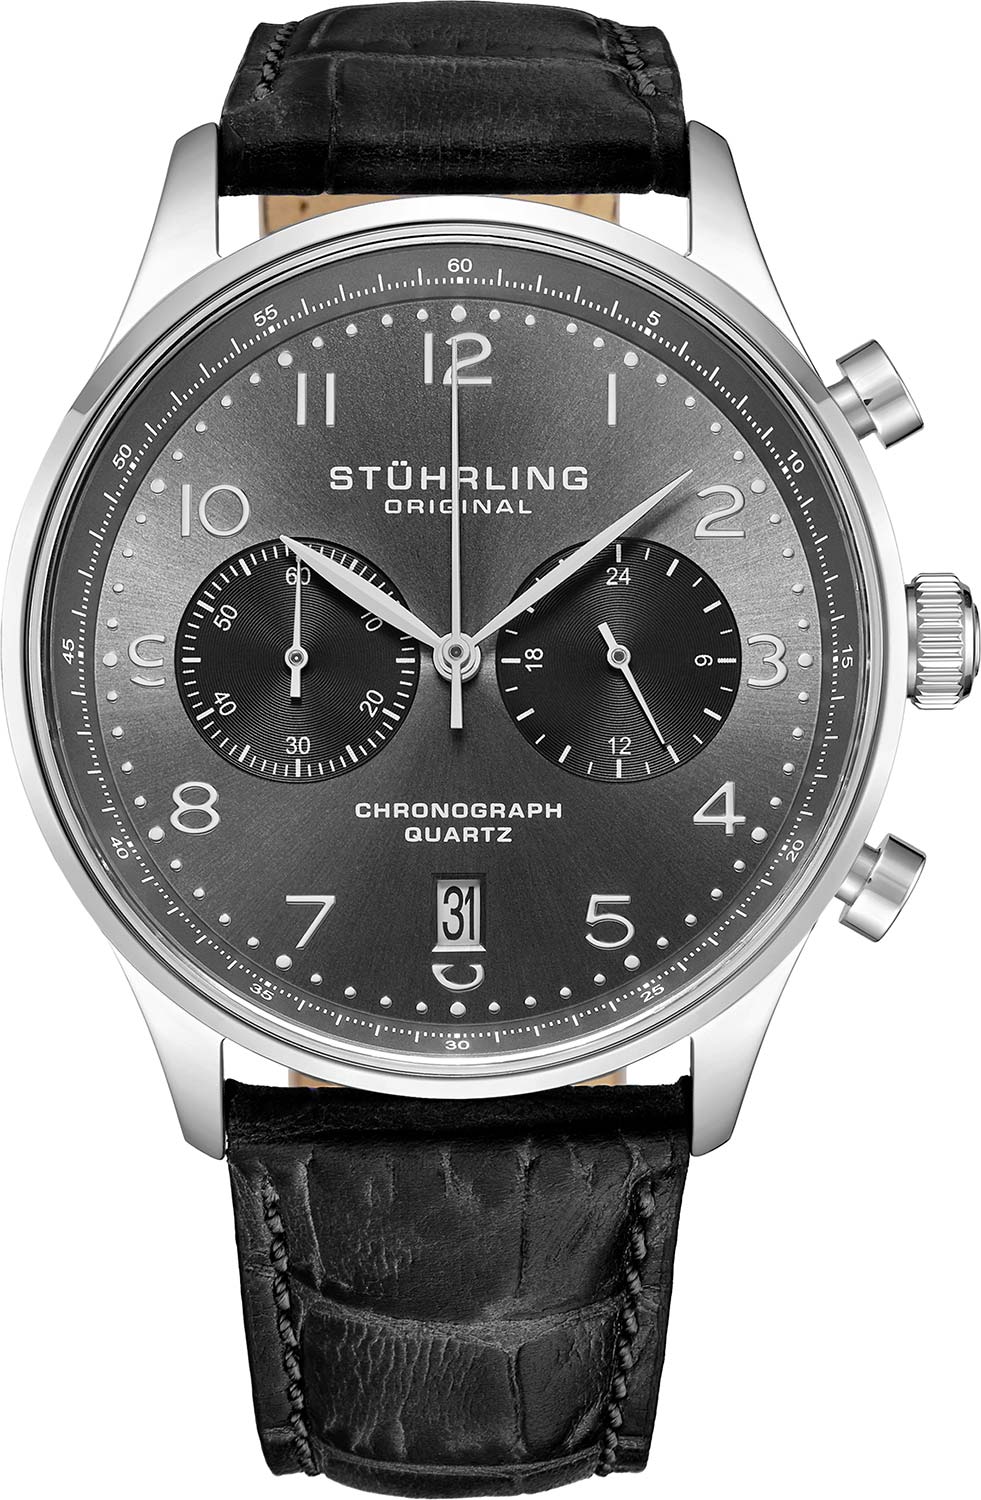 Наручные часы Stuhrling 896.02 с хронографом